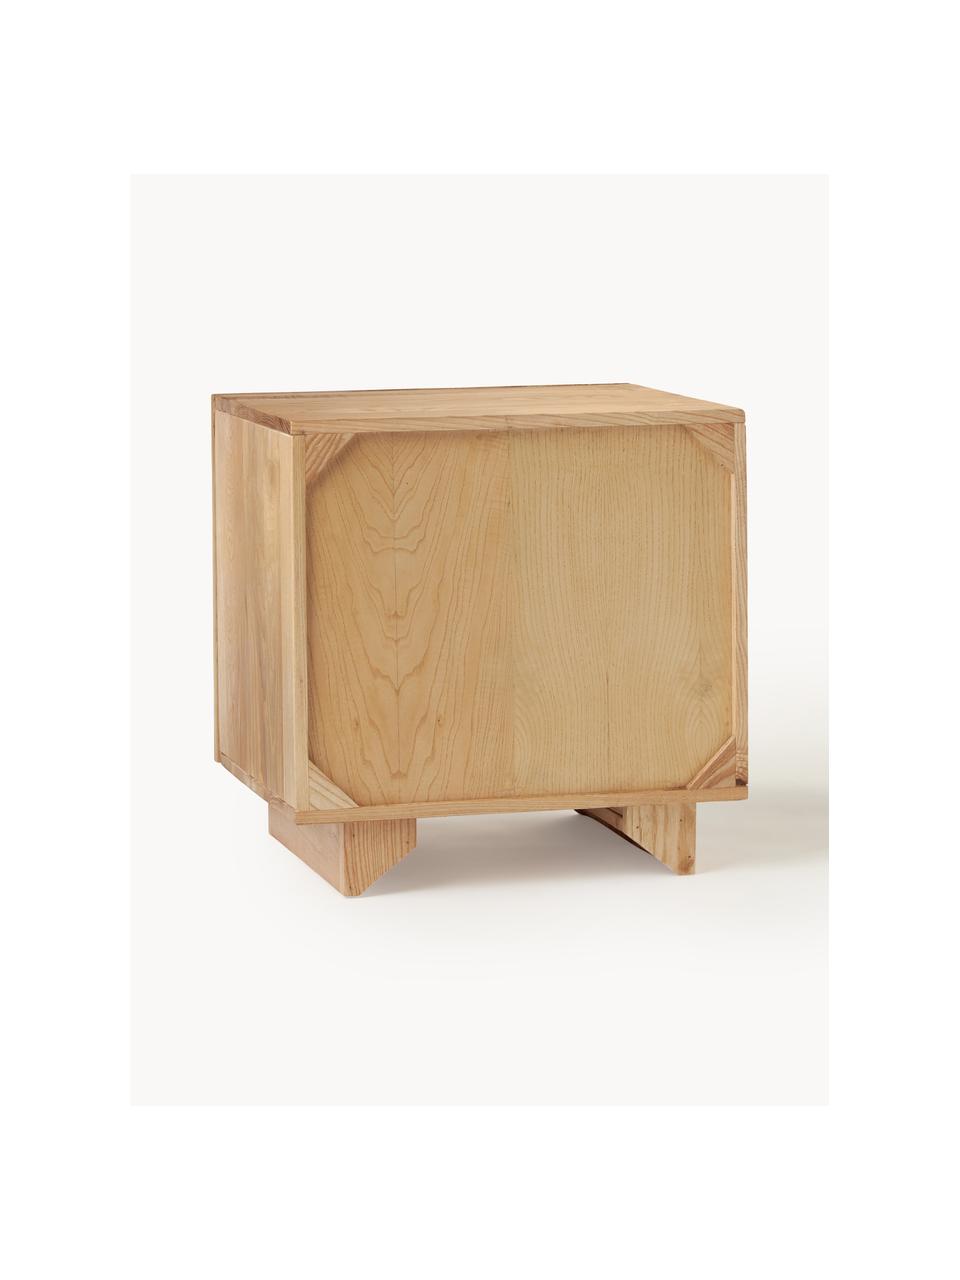 Nachttisch Louis aus Eschenholz, Massives Eschenholz, lackiert

Dieses Produkt wird aus nachhaltig gewonnenem, FSC®-zertifiziertem Holz gefertigt., Eschenholz, B 50 x H 50 cm